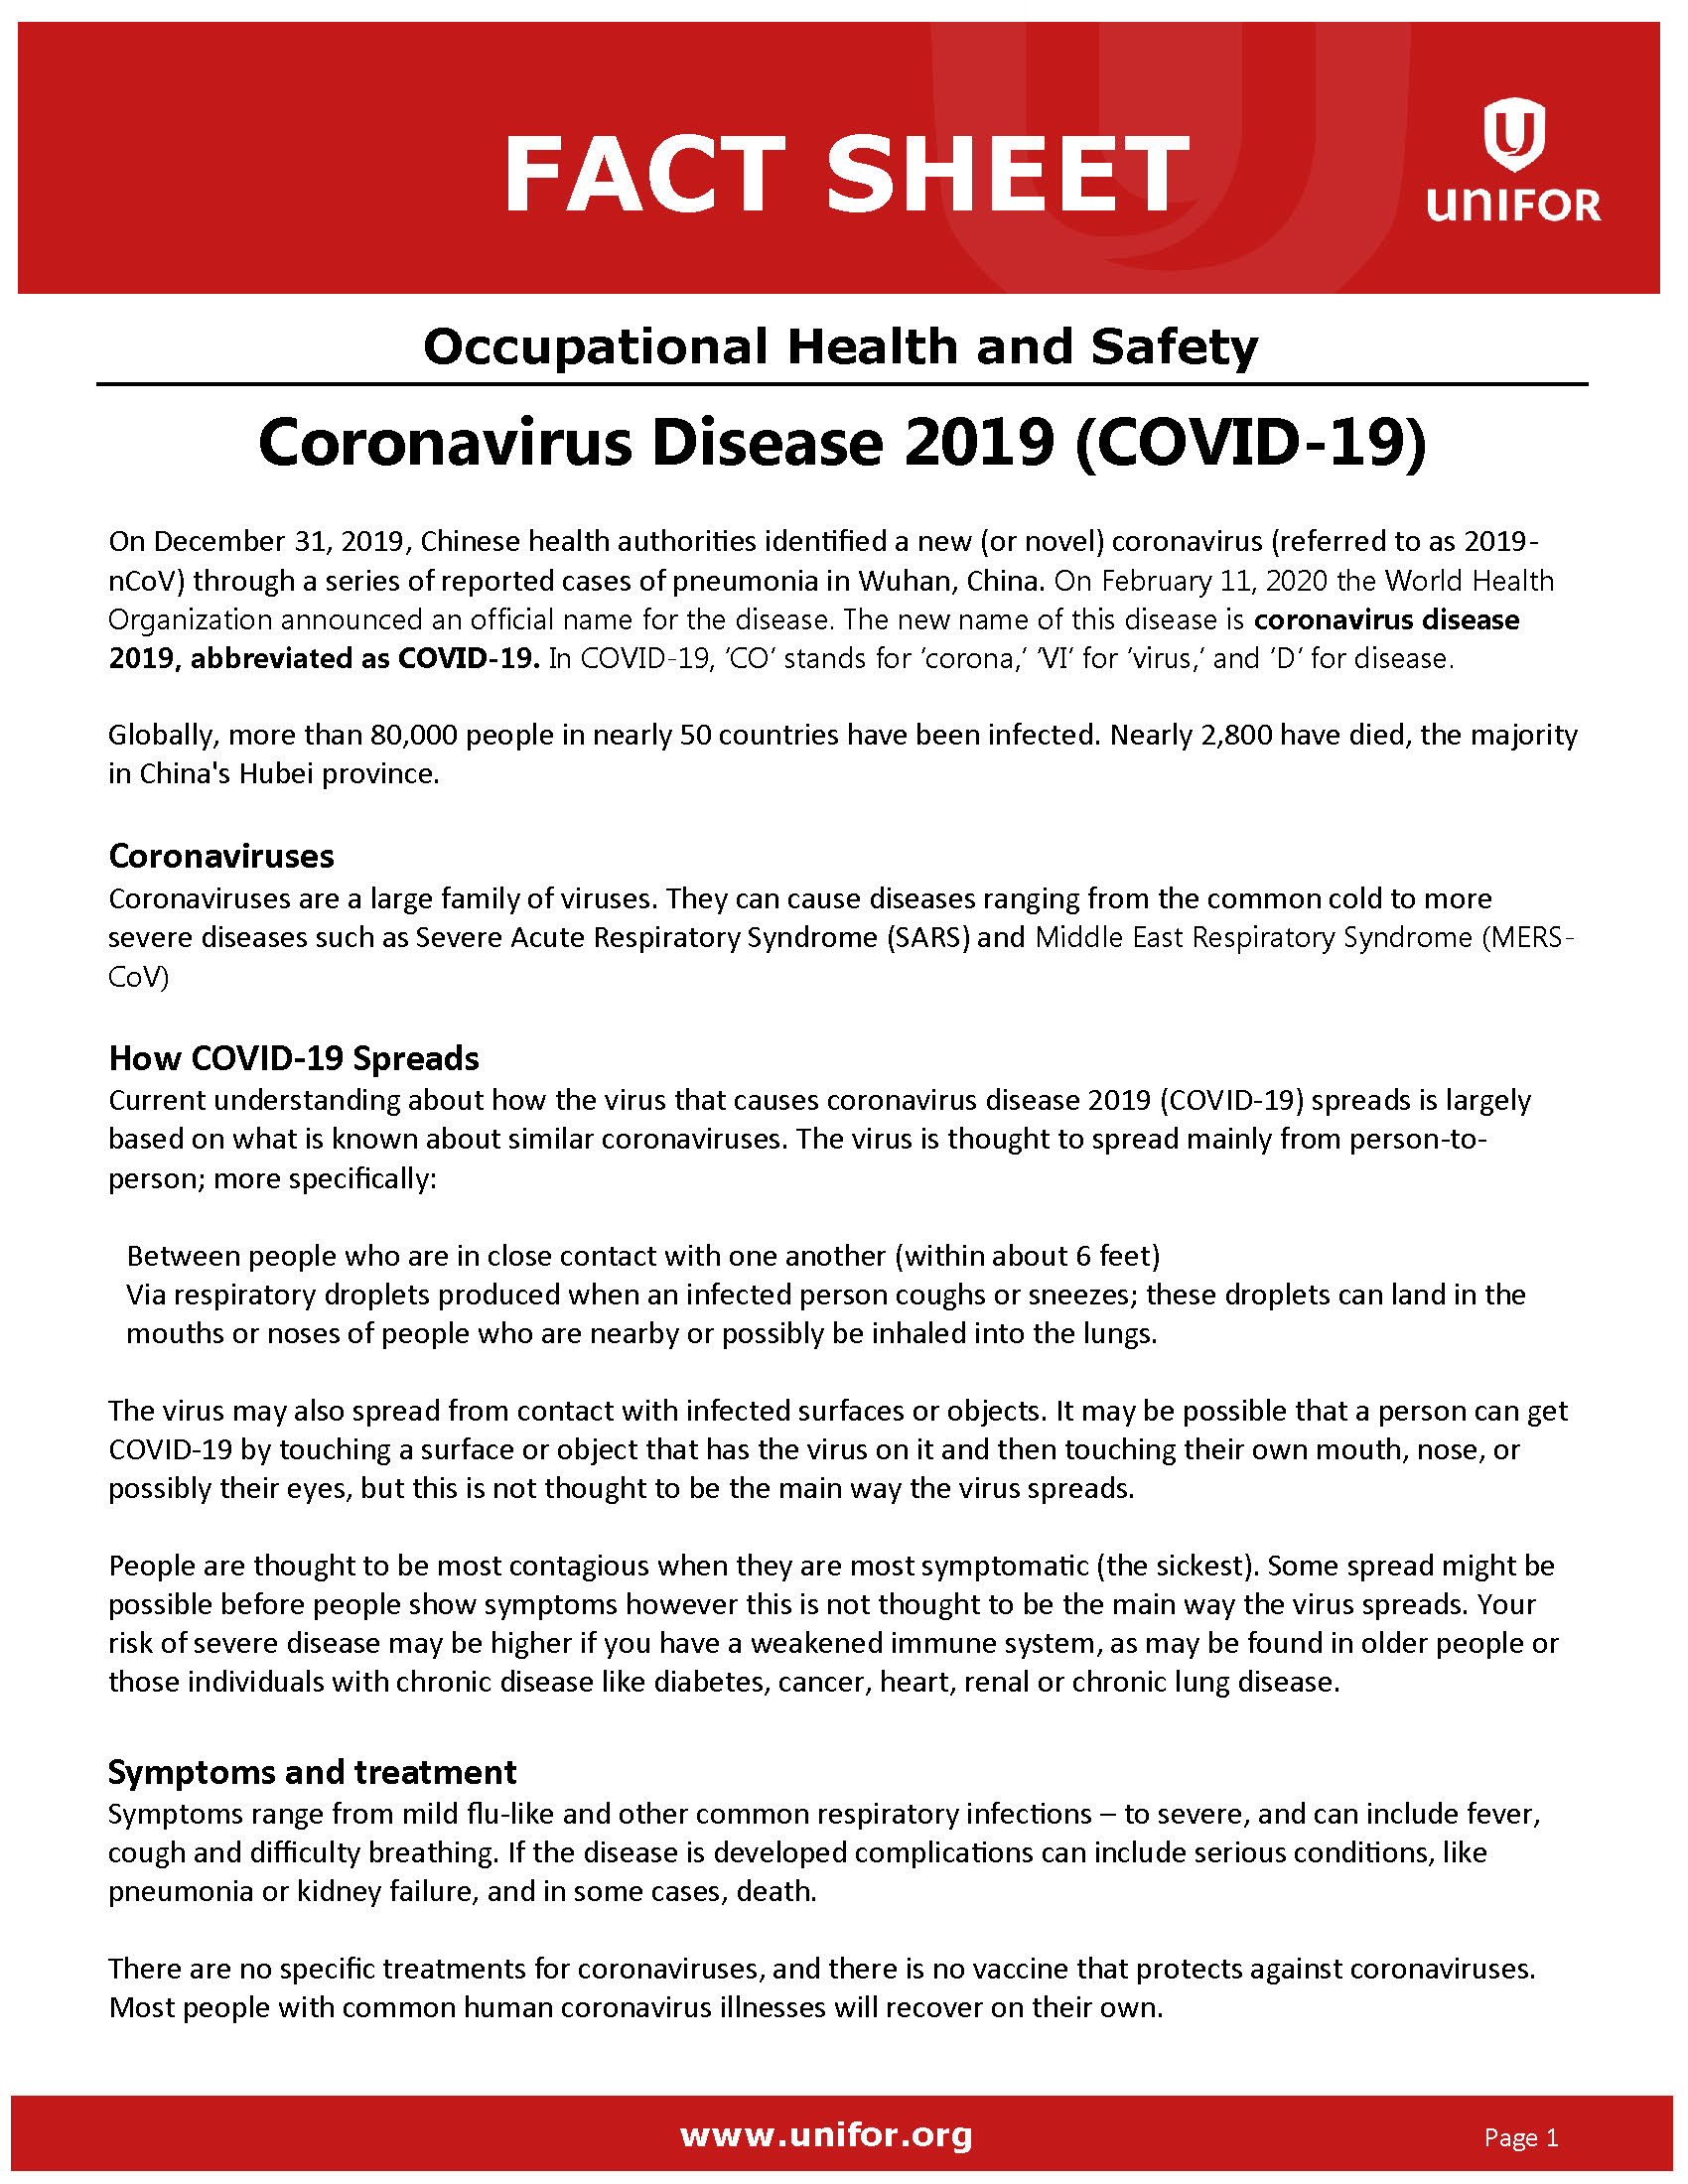 Coronavirus - Fact Sheet 2020 Mar. 13_Page_1